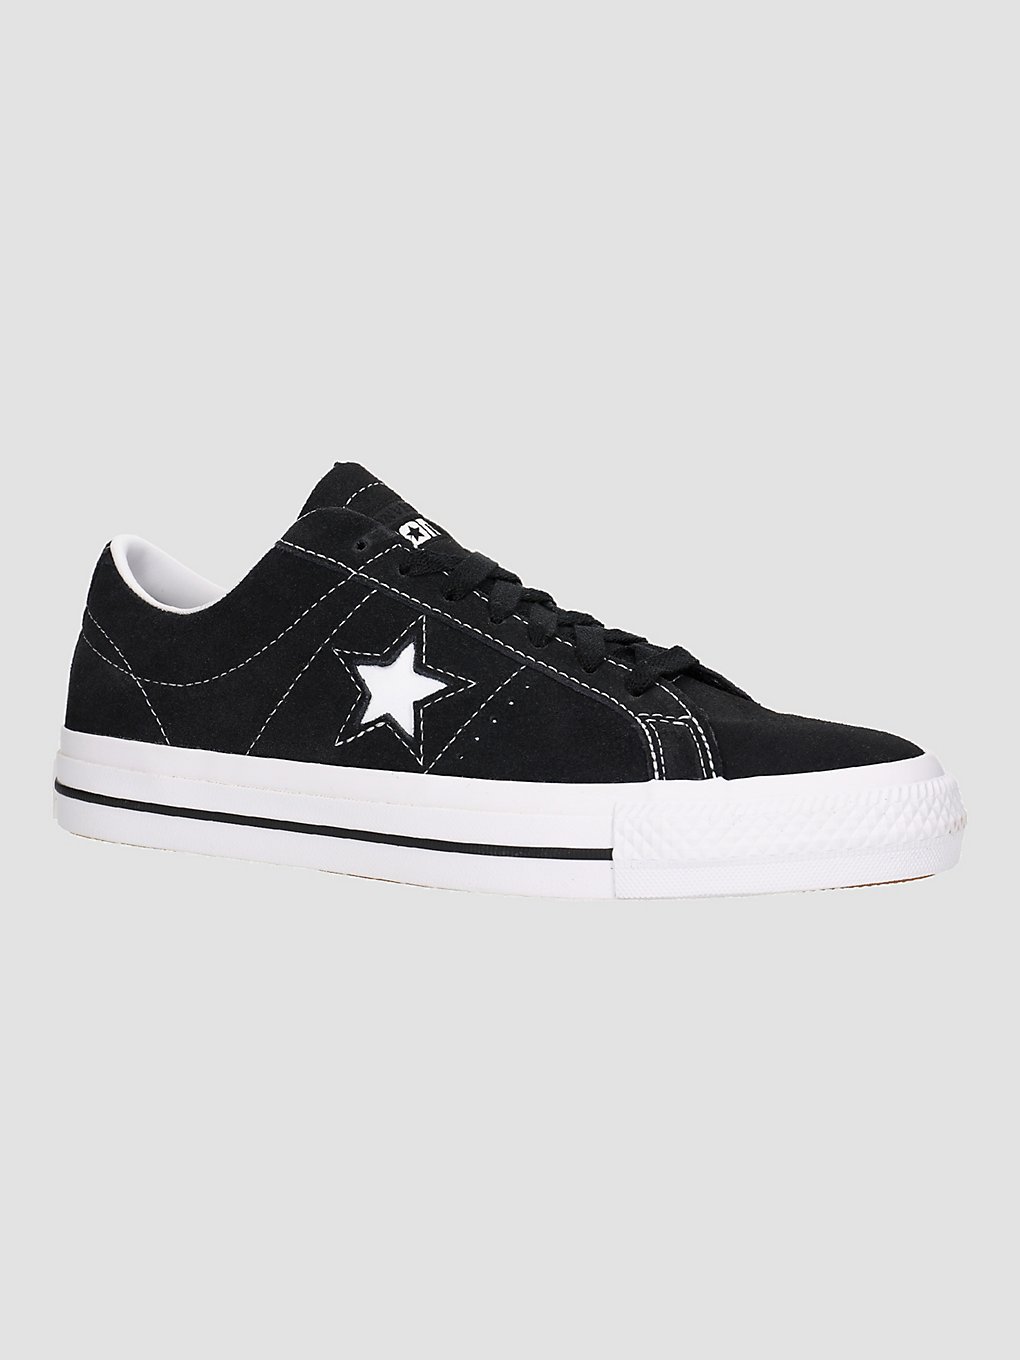 Converse One Star Pro Chaussures de skate noir